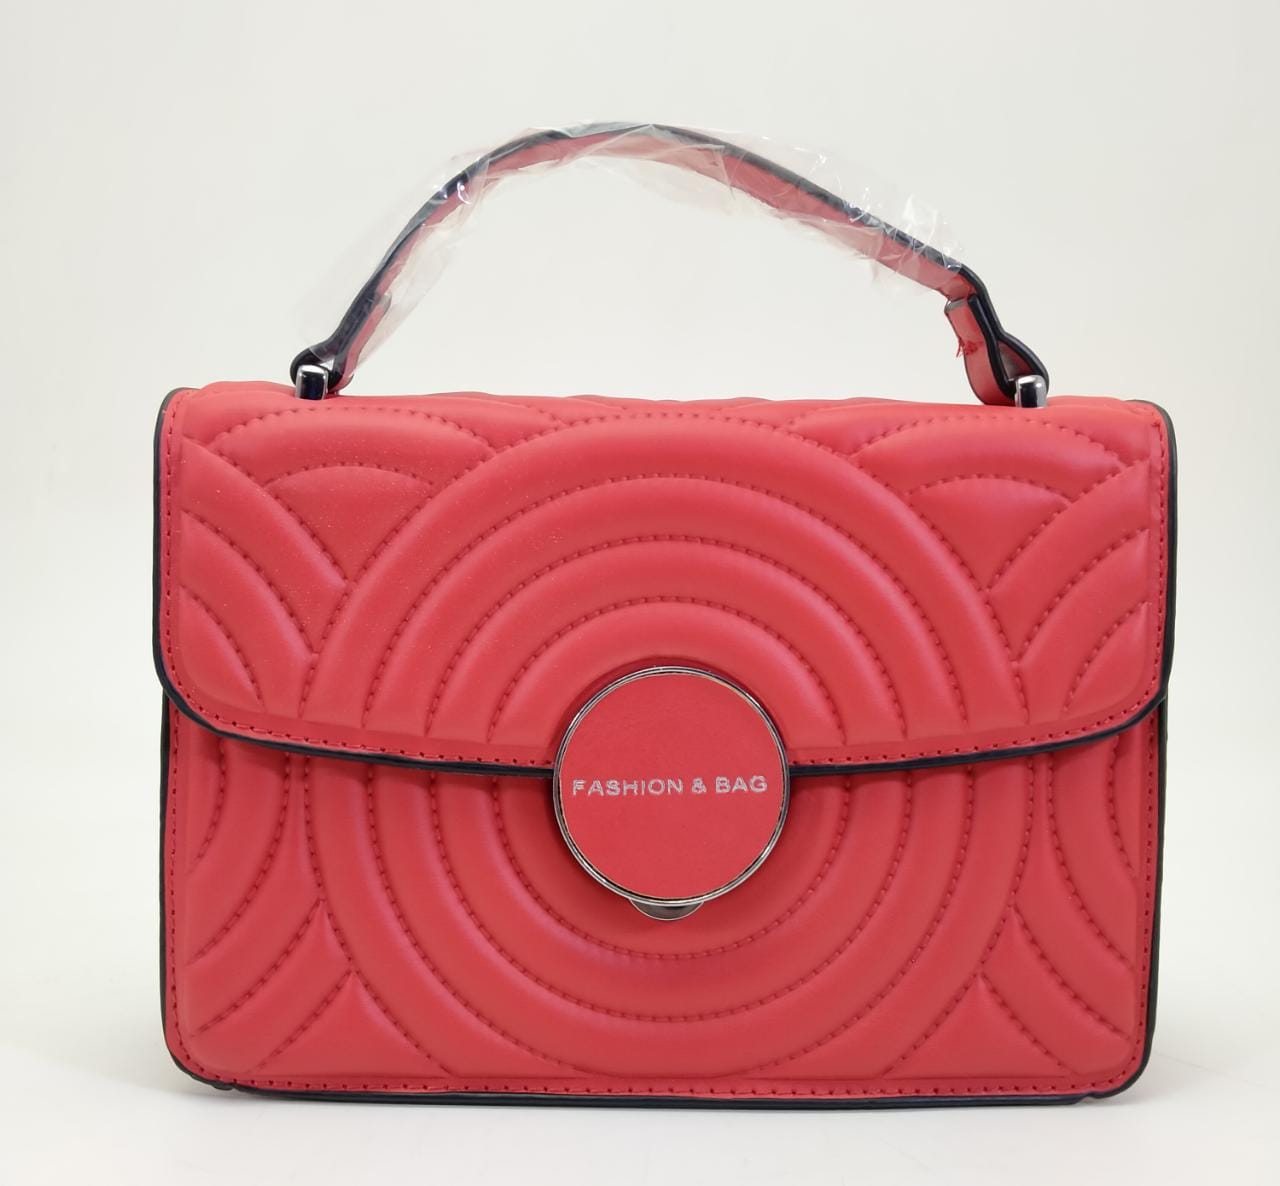 Fashion and bag red crossbody bag 